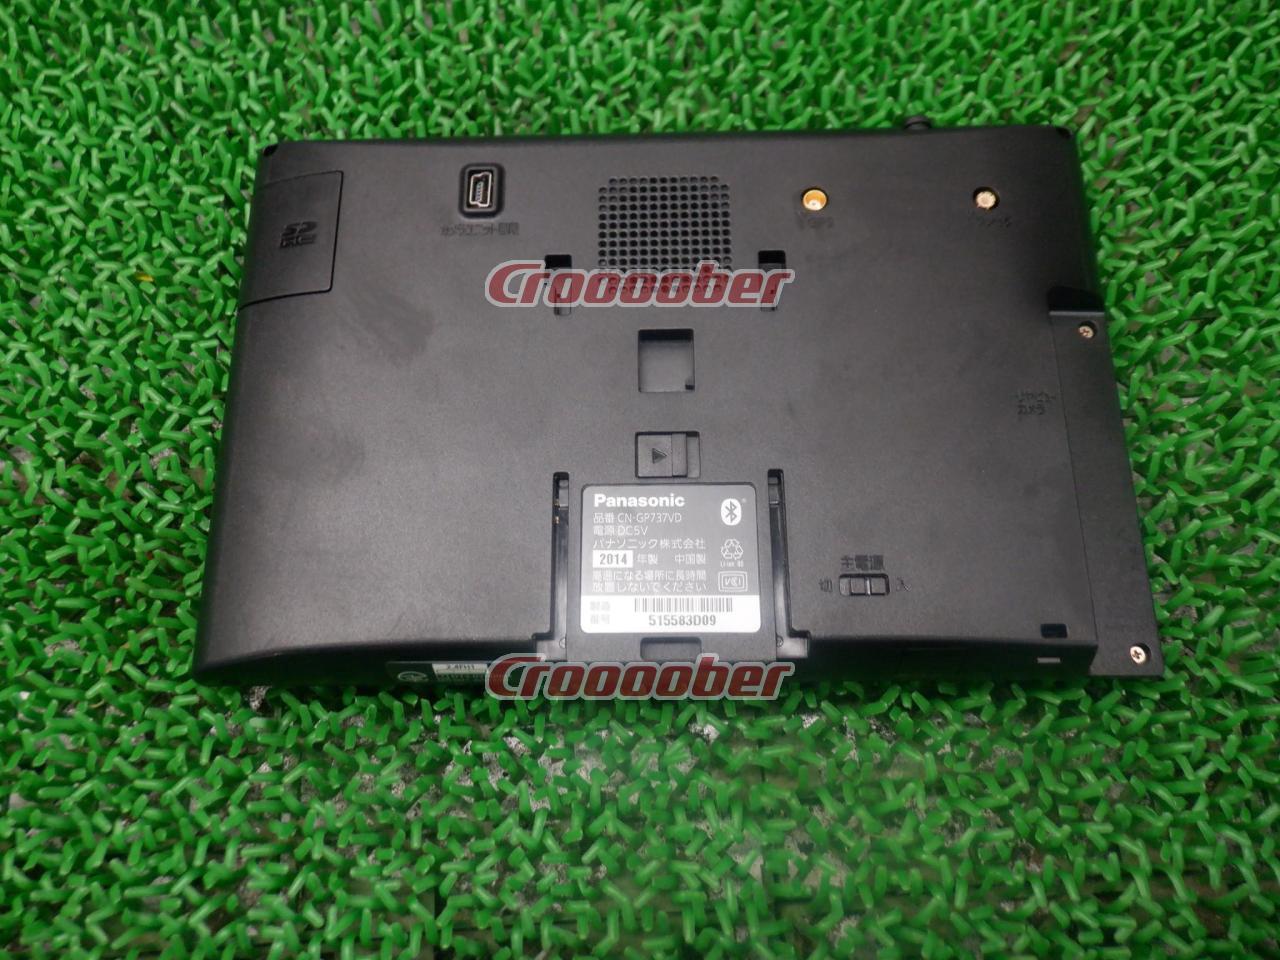 Panasonic CN-GP737VD + GORILLA EYE | Portable Navigation(digital 